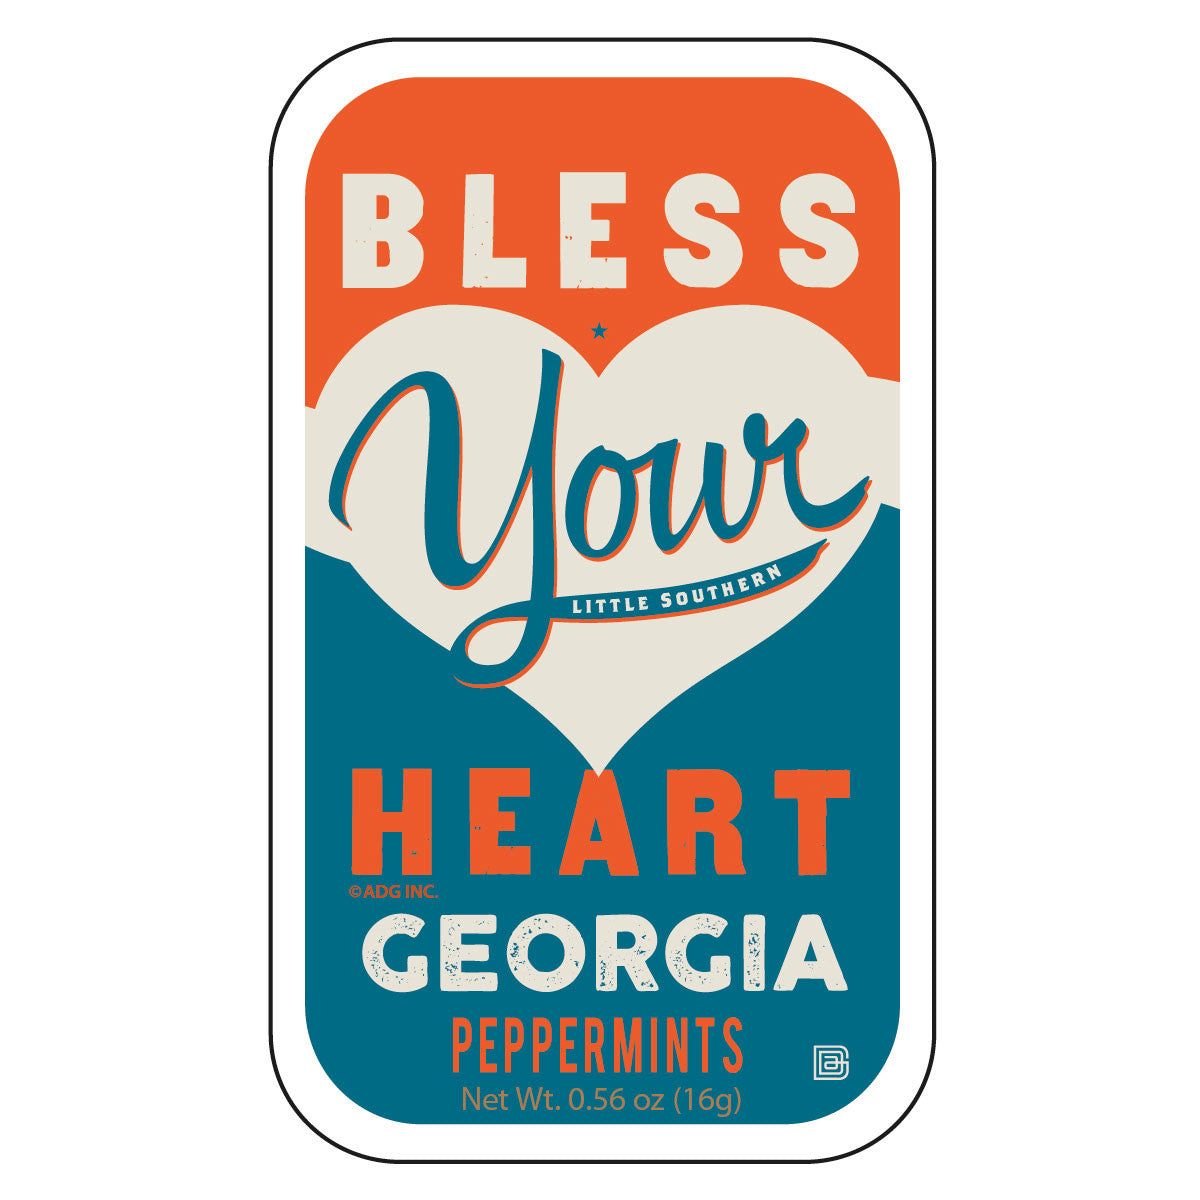 Bless Your Heart Georgia - 01055A